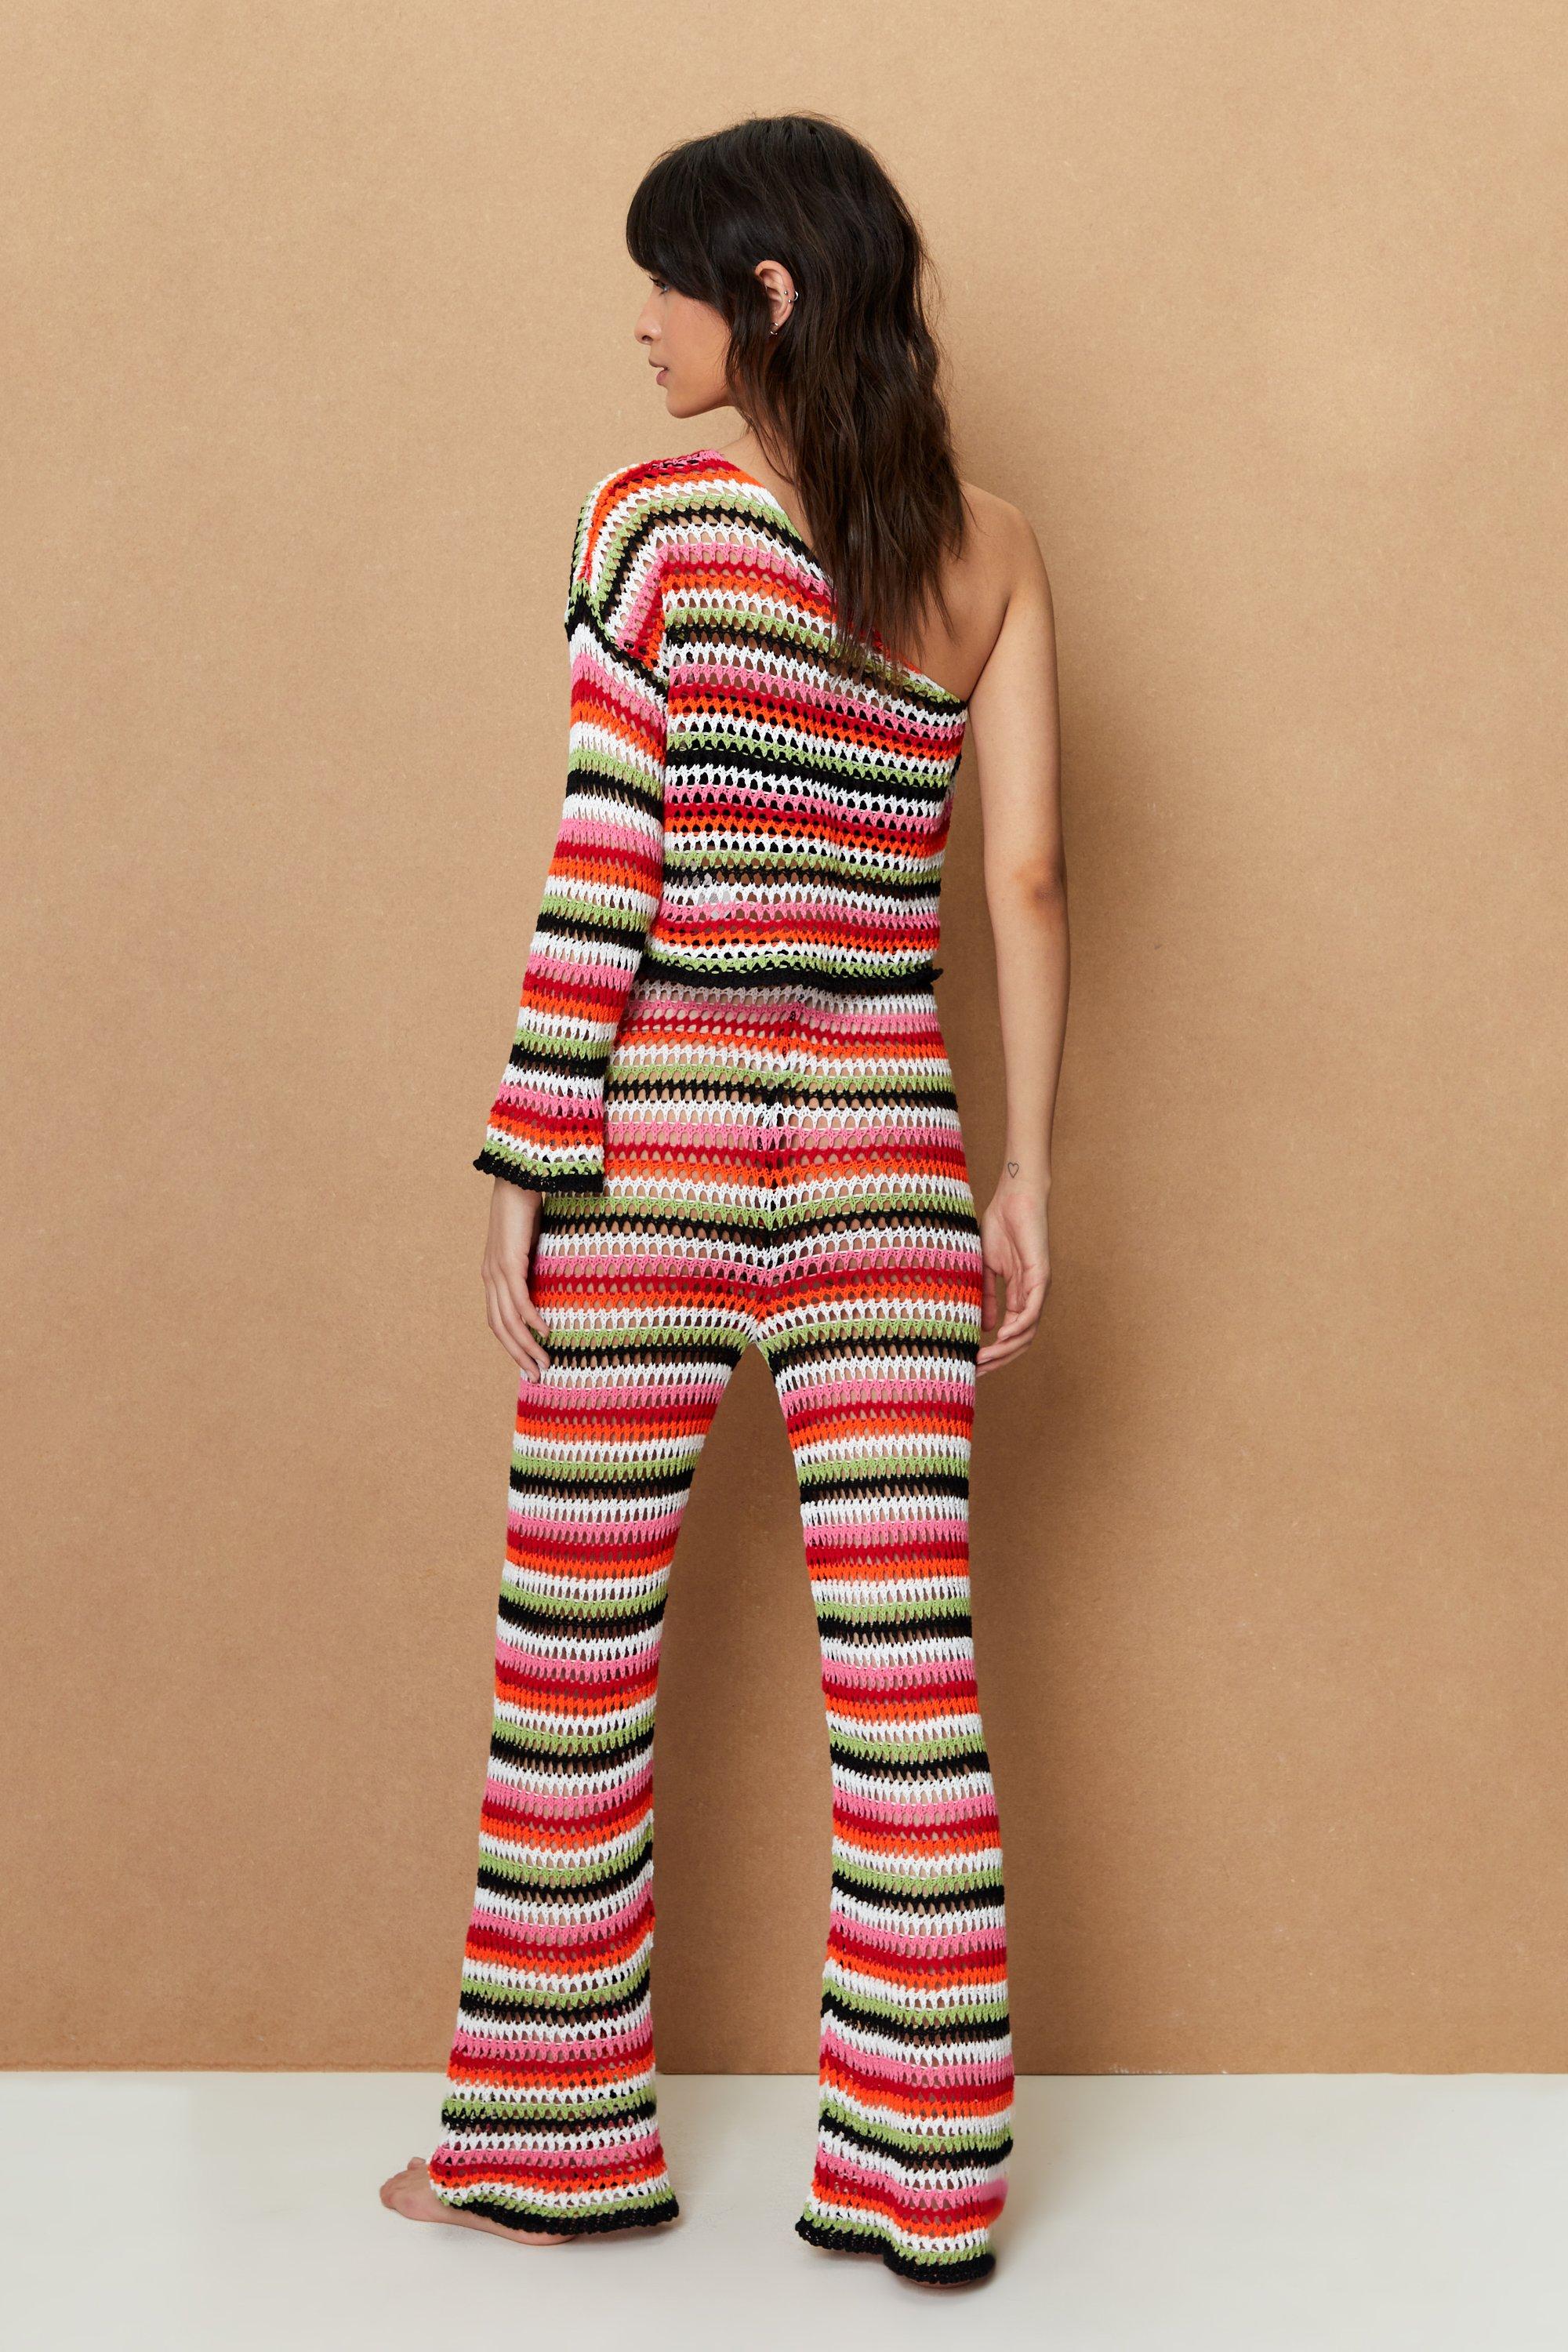 Crochet Pattern: Livia One Shoulder Top